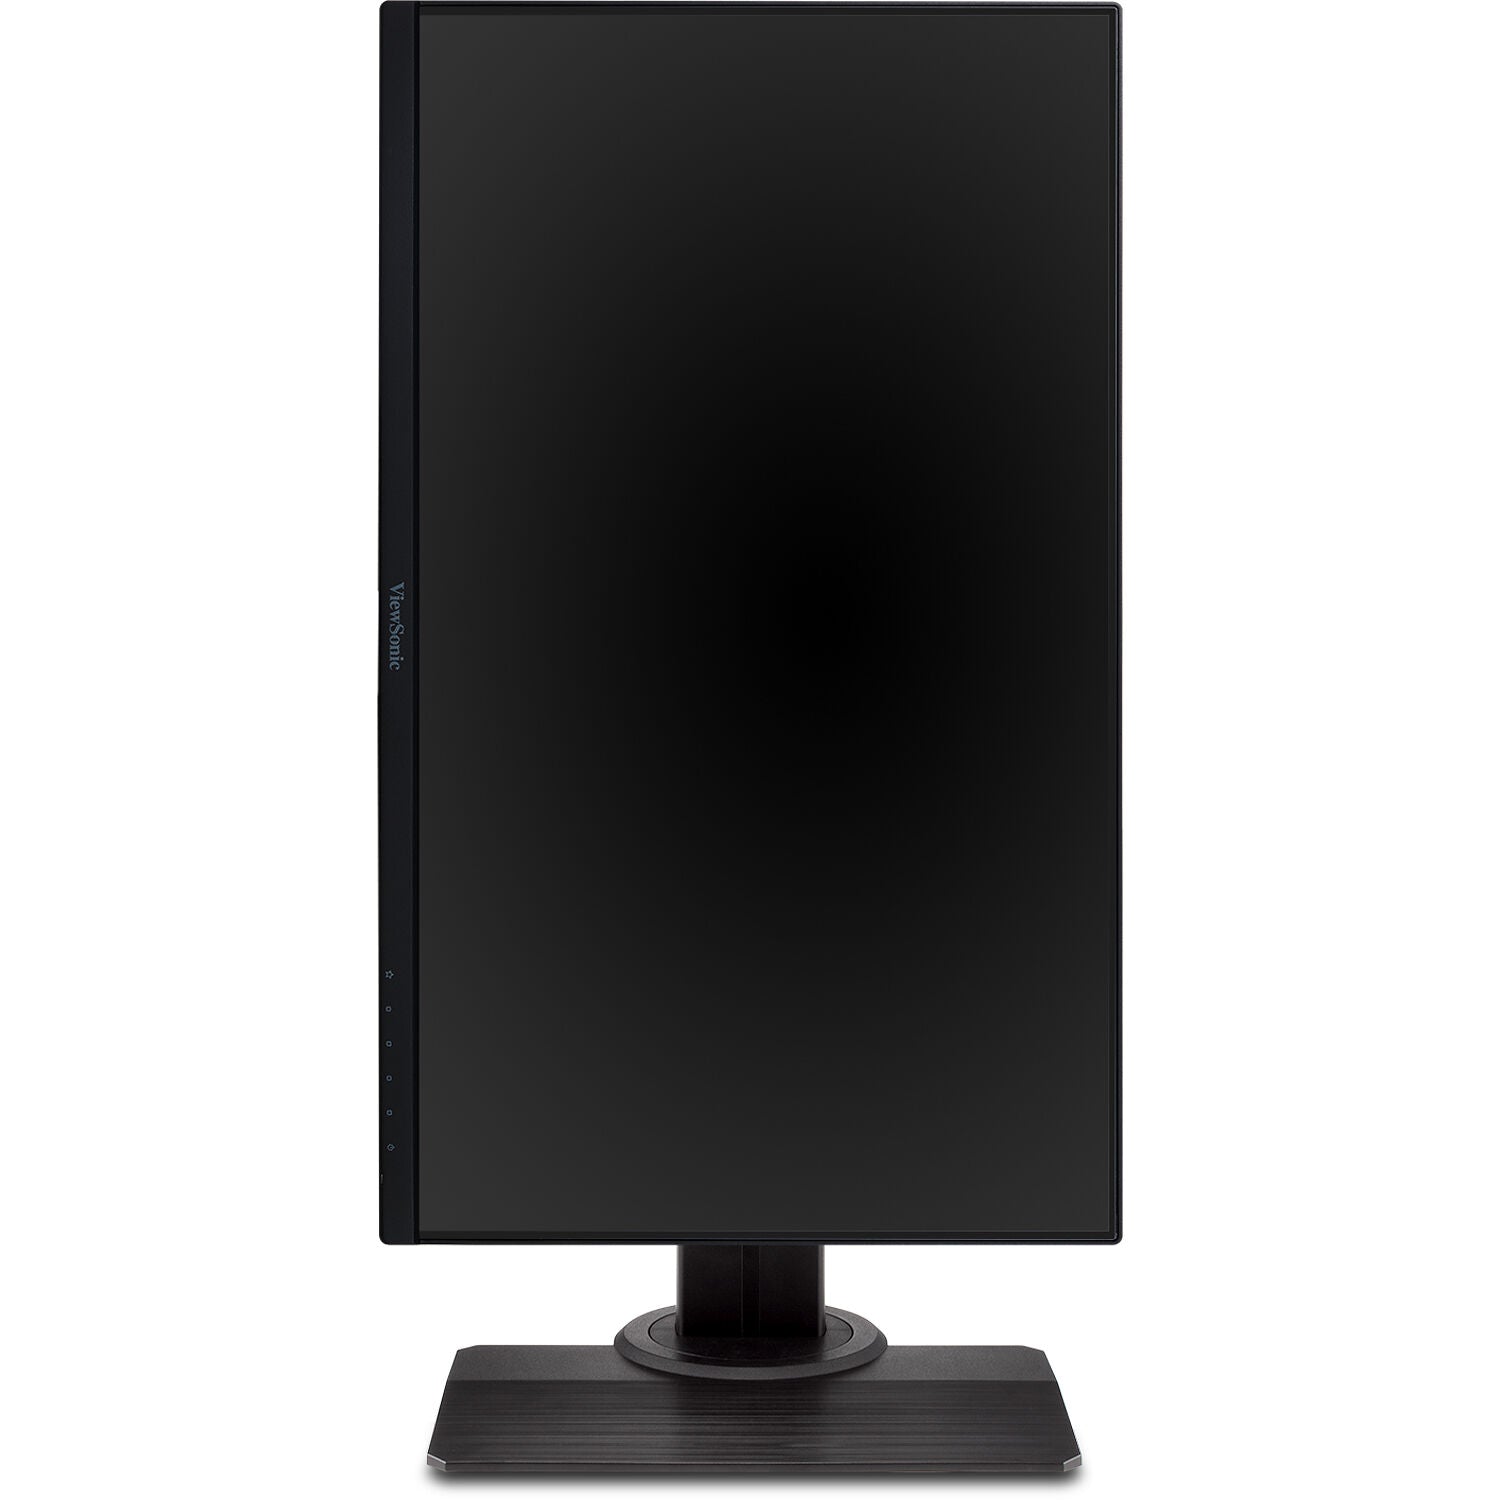 ViewSonic XG2431-R 24" Display, IPS Panel Monitor - Certified Refurbished